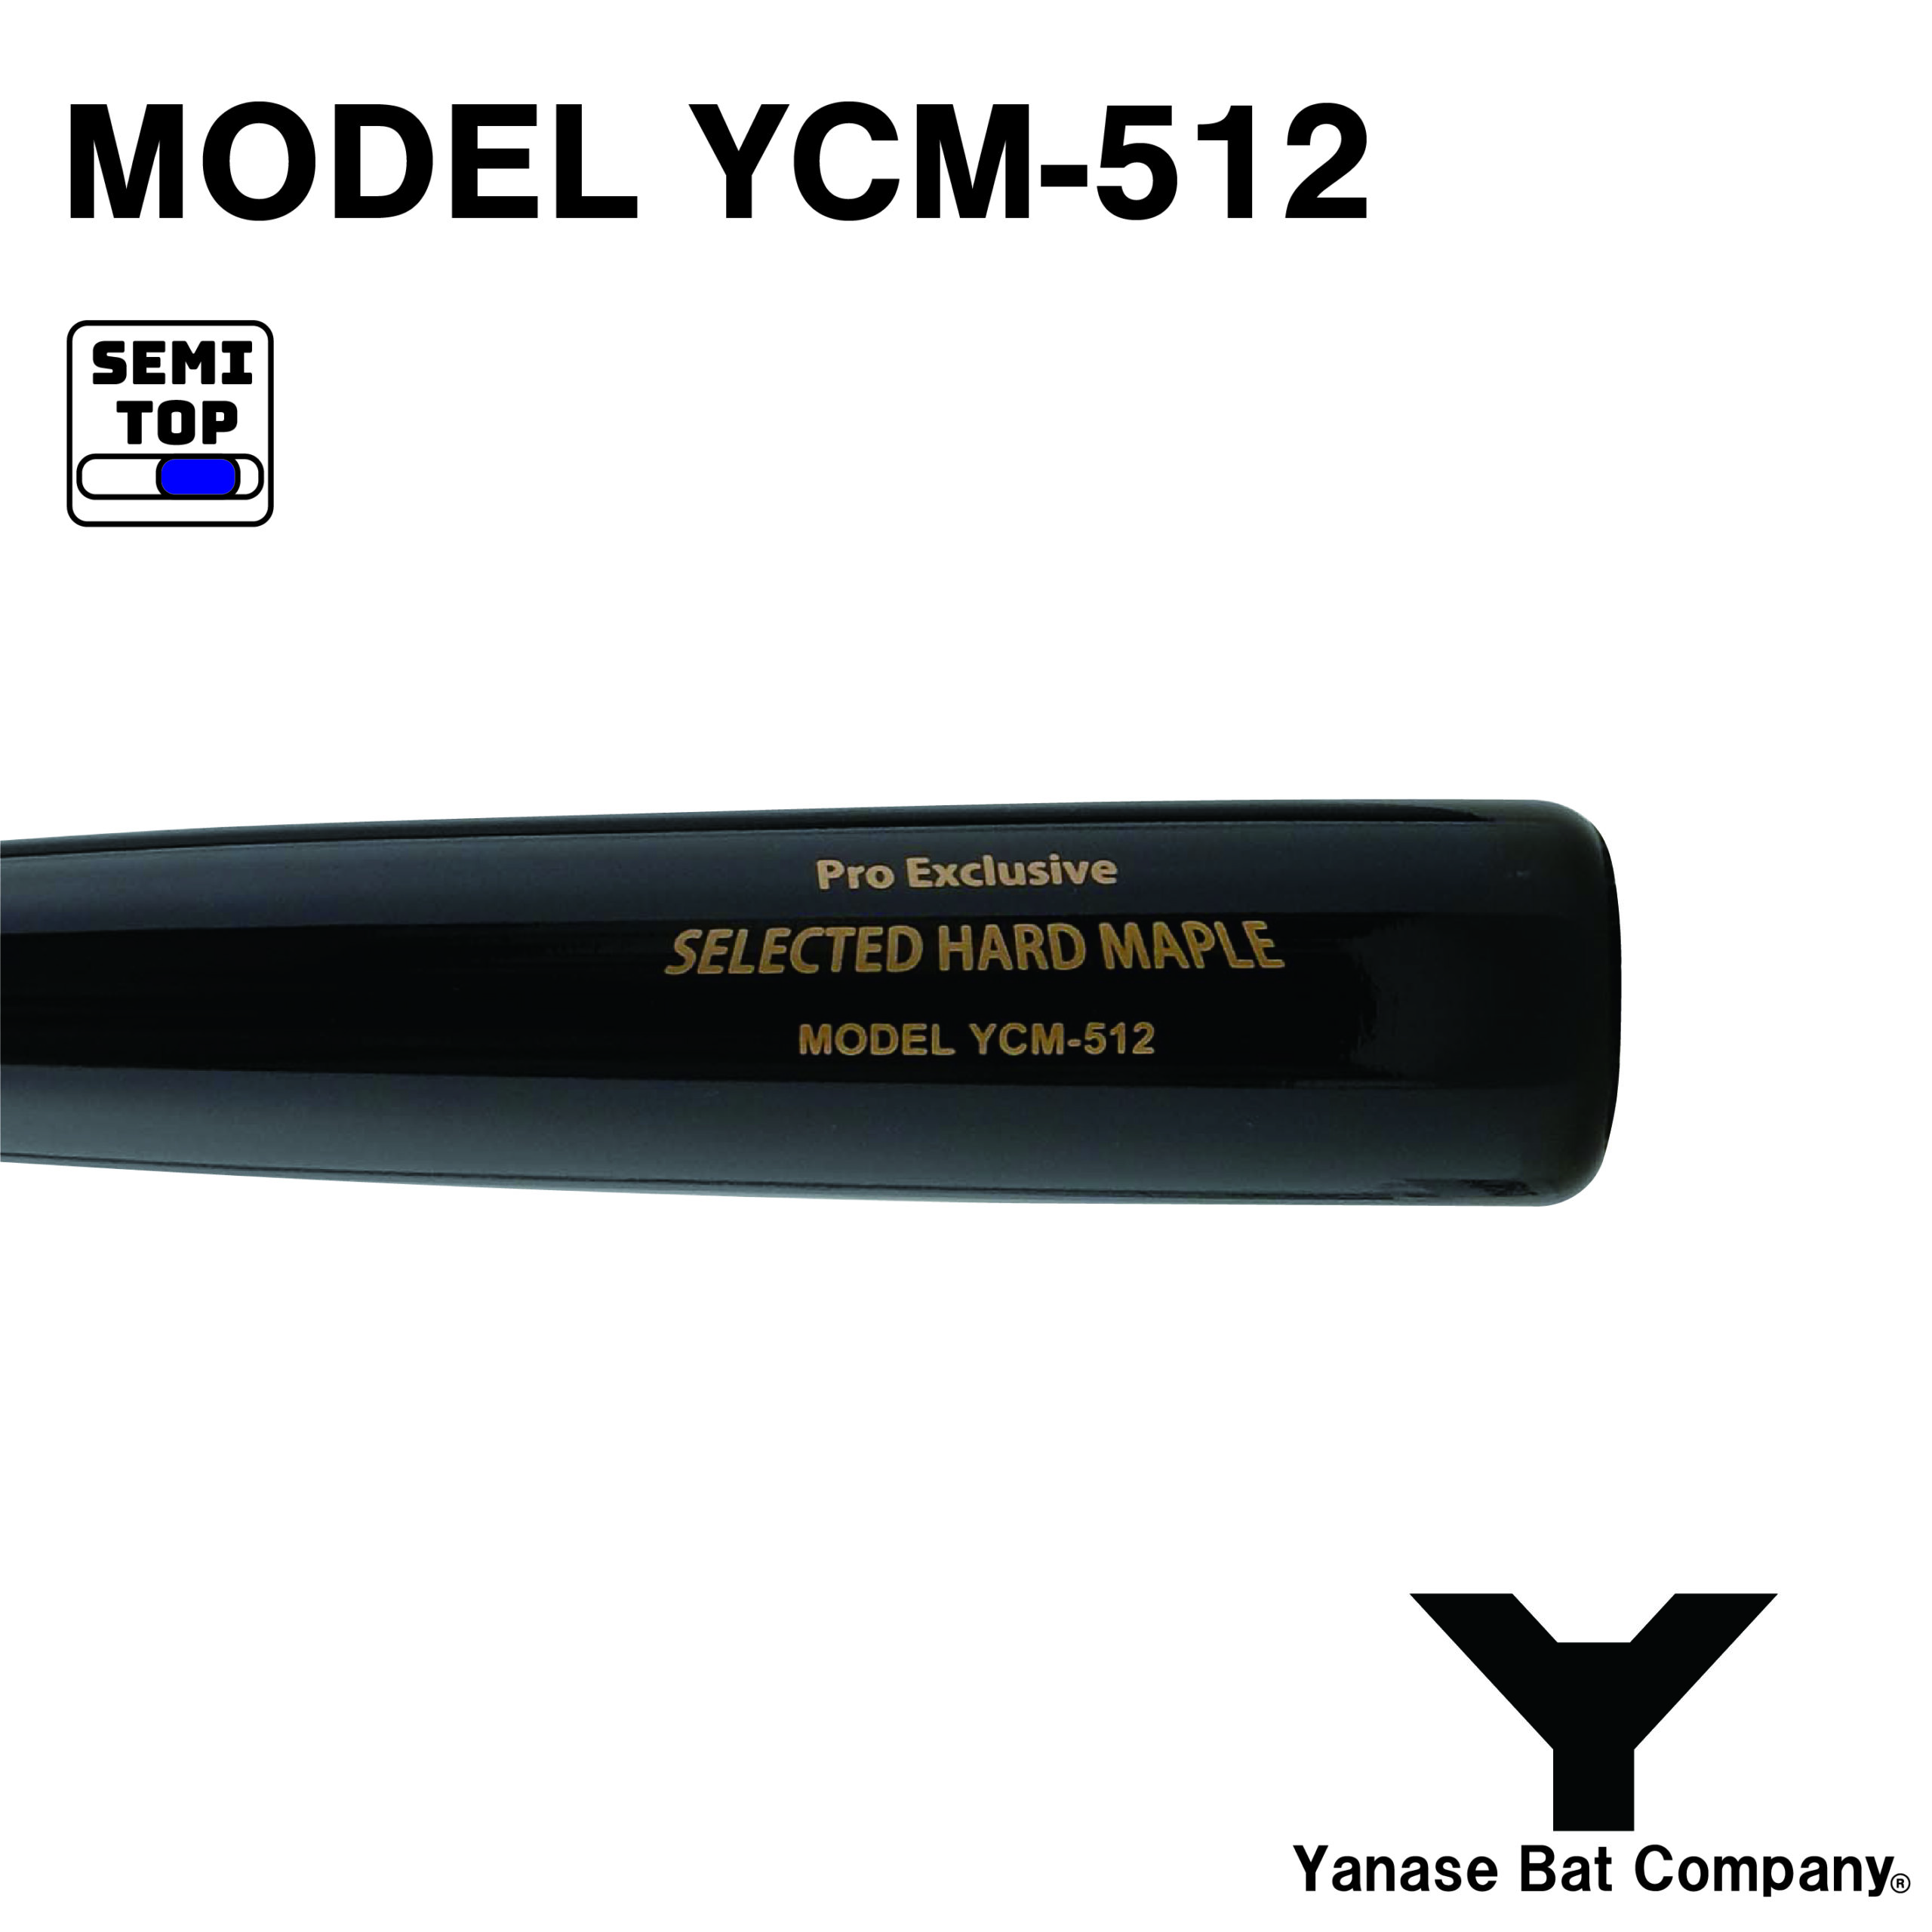 YCM-512 - YANASE BAT COMPANY